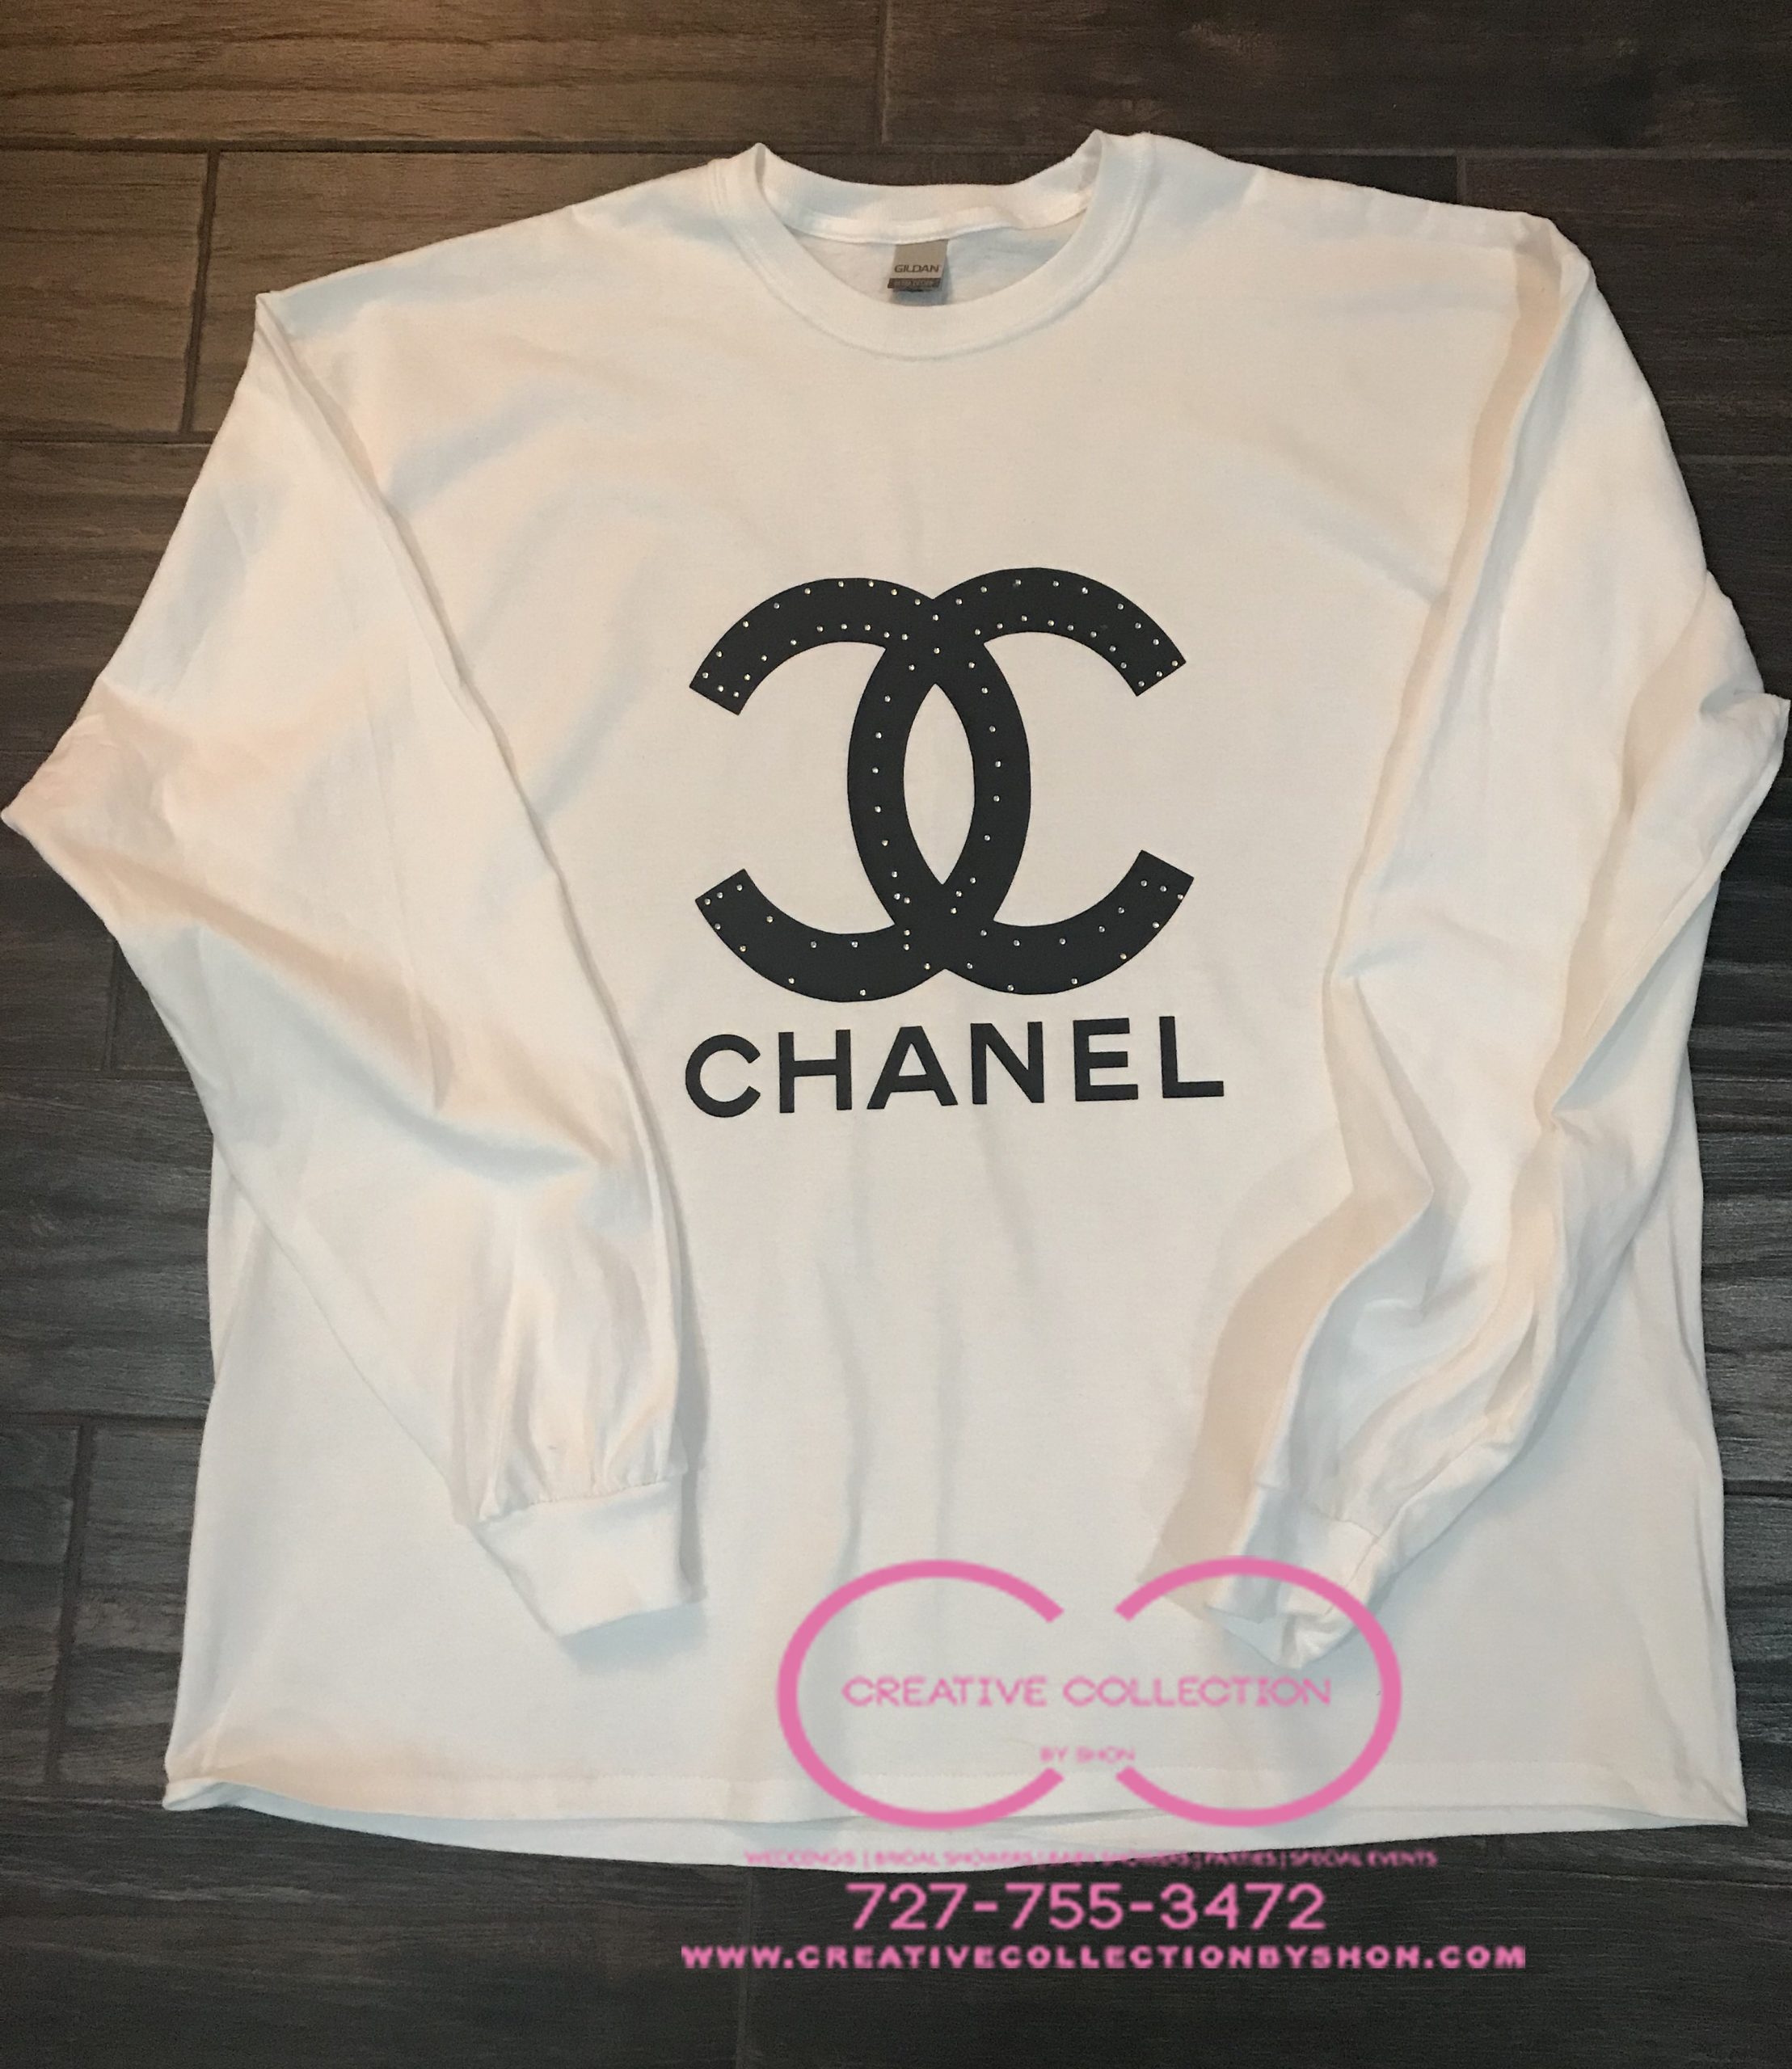 chanel tee shirt for women